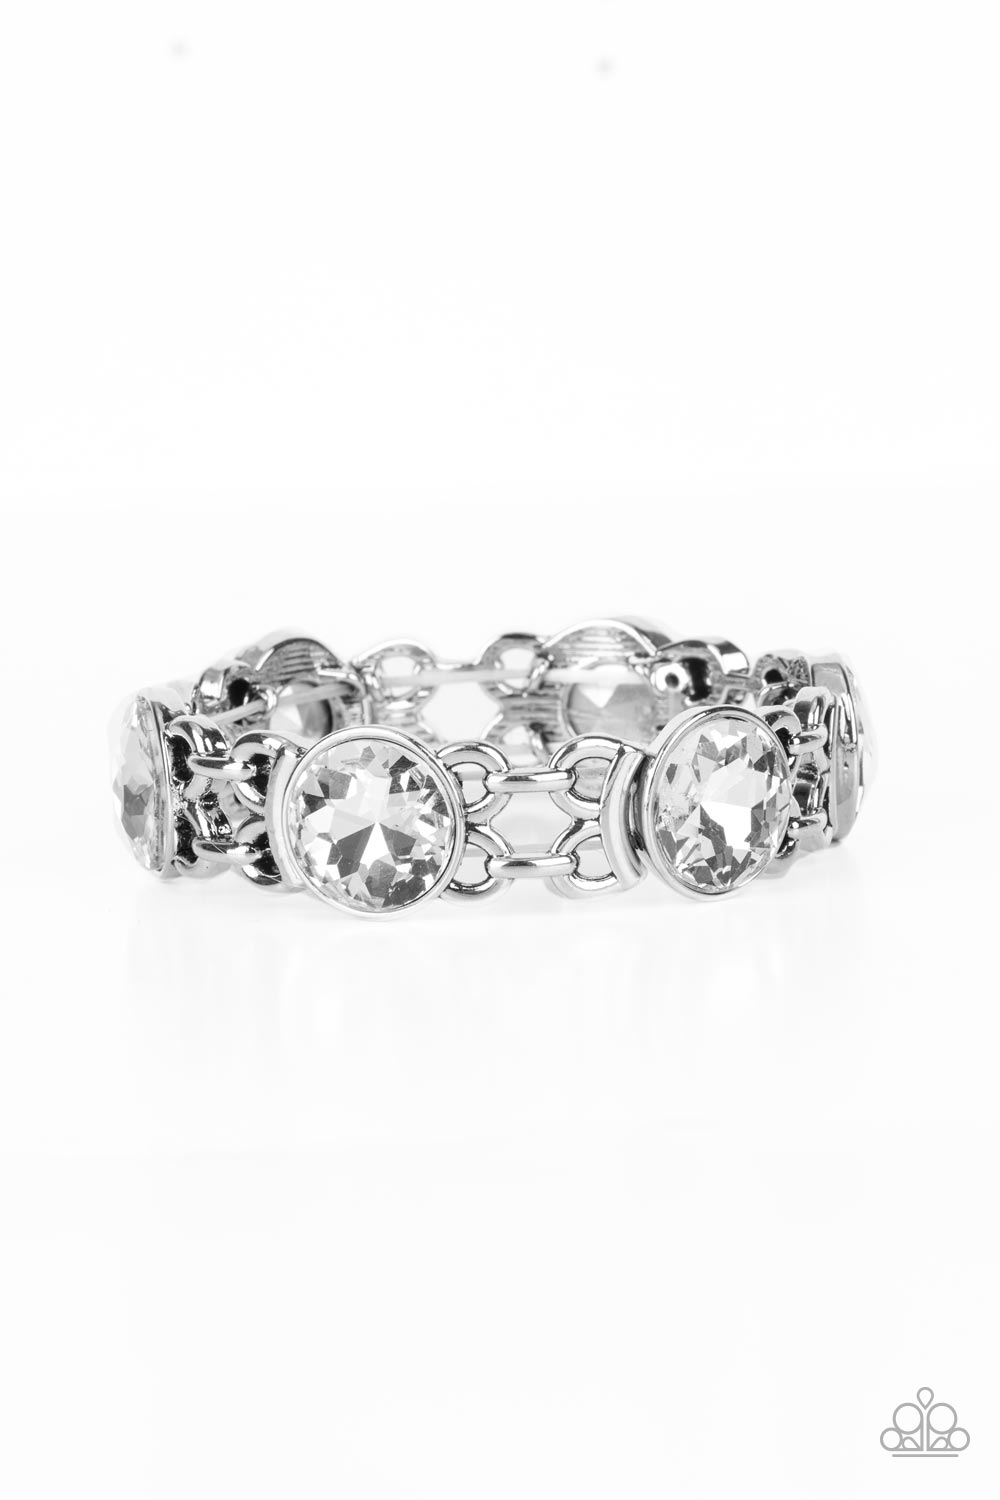 Devoted to Drama White Bracelet - Paparazzi Accessories- lightbox - CarasShop.com - $5 Jewelry by Cara Jewels